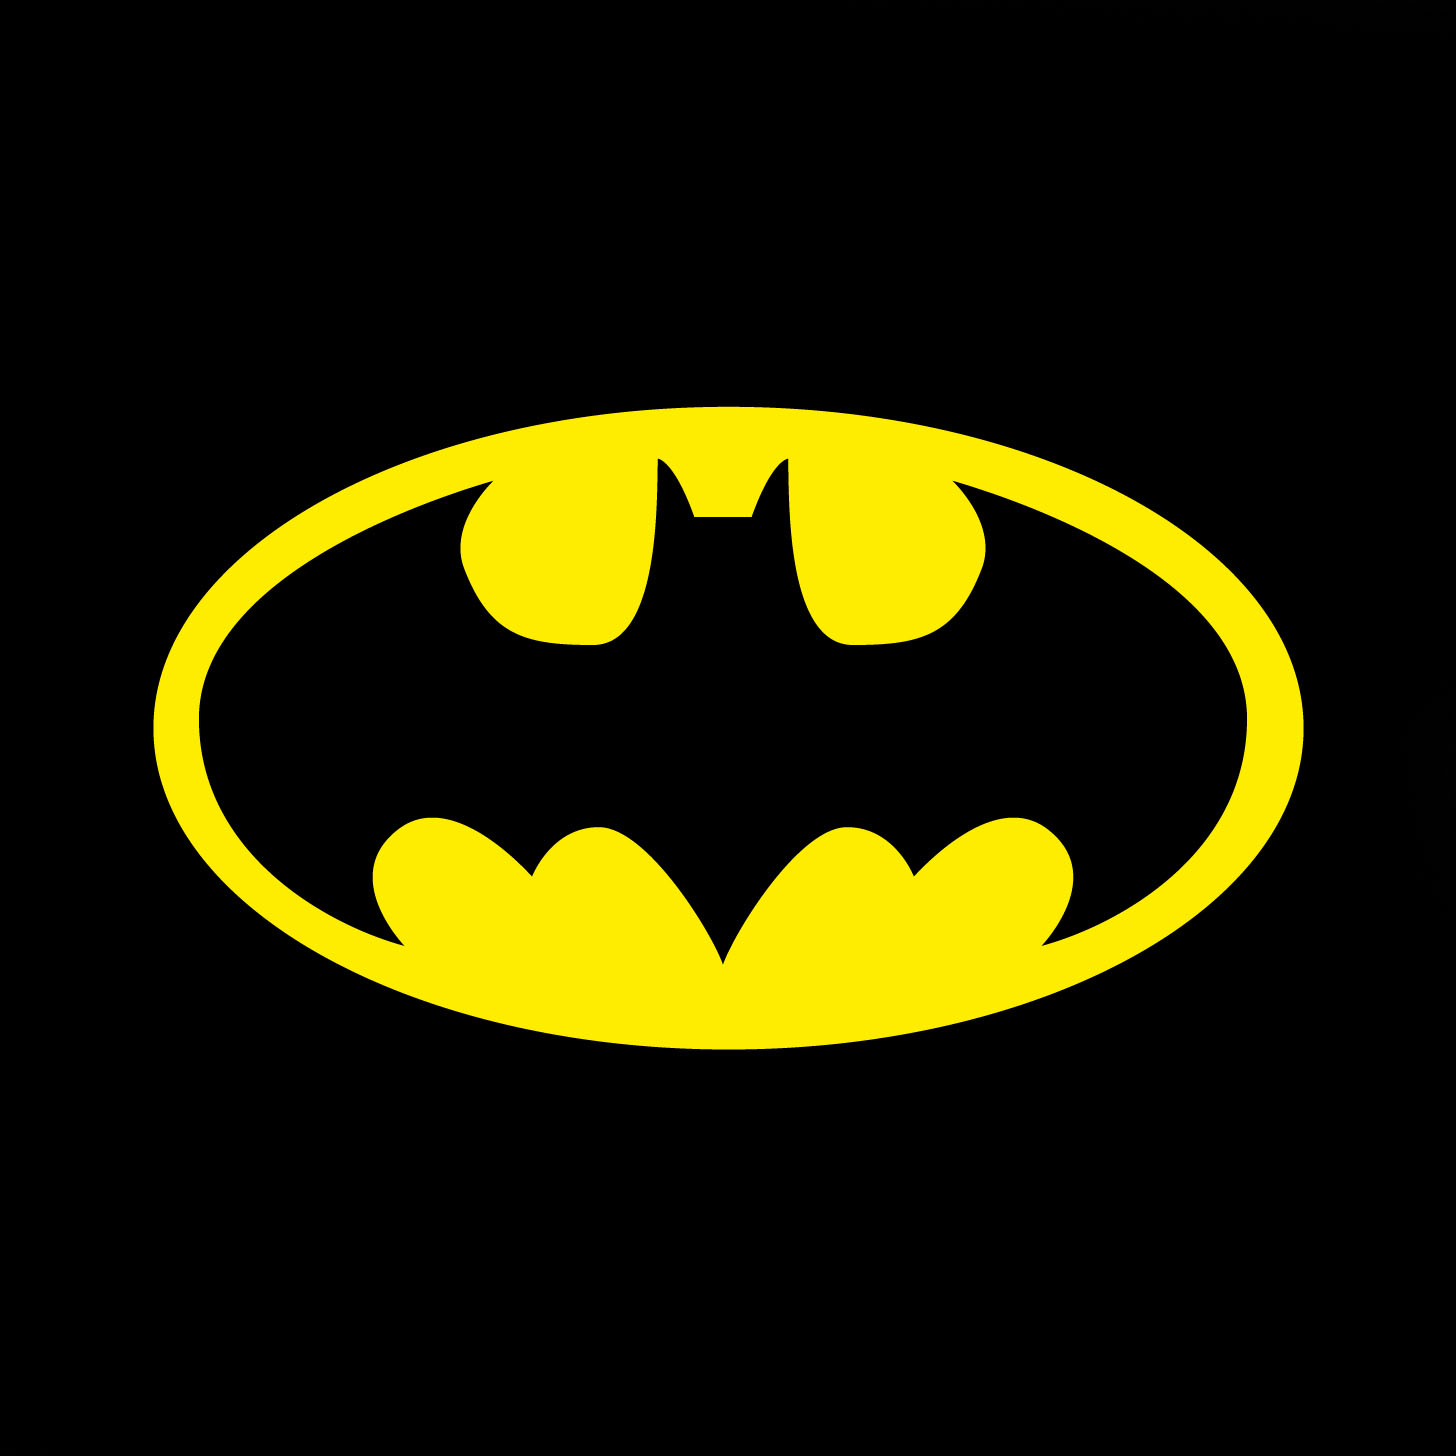 Batman Aufkleber Autoaufkleber Sticker 15cm x 10cm, Fun